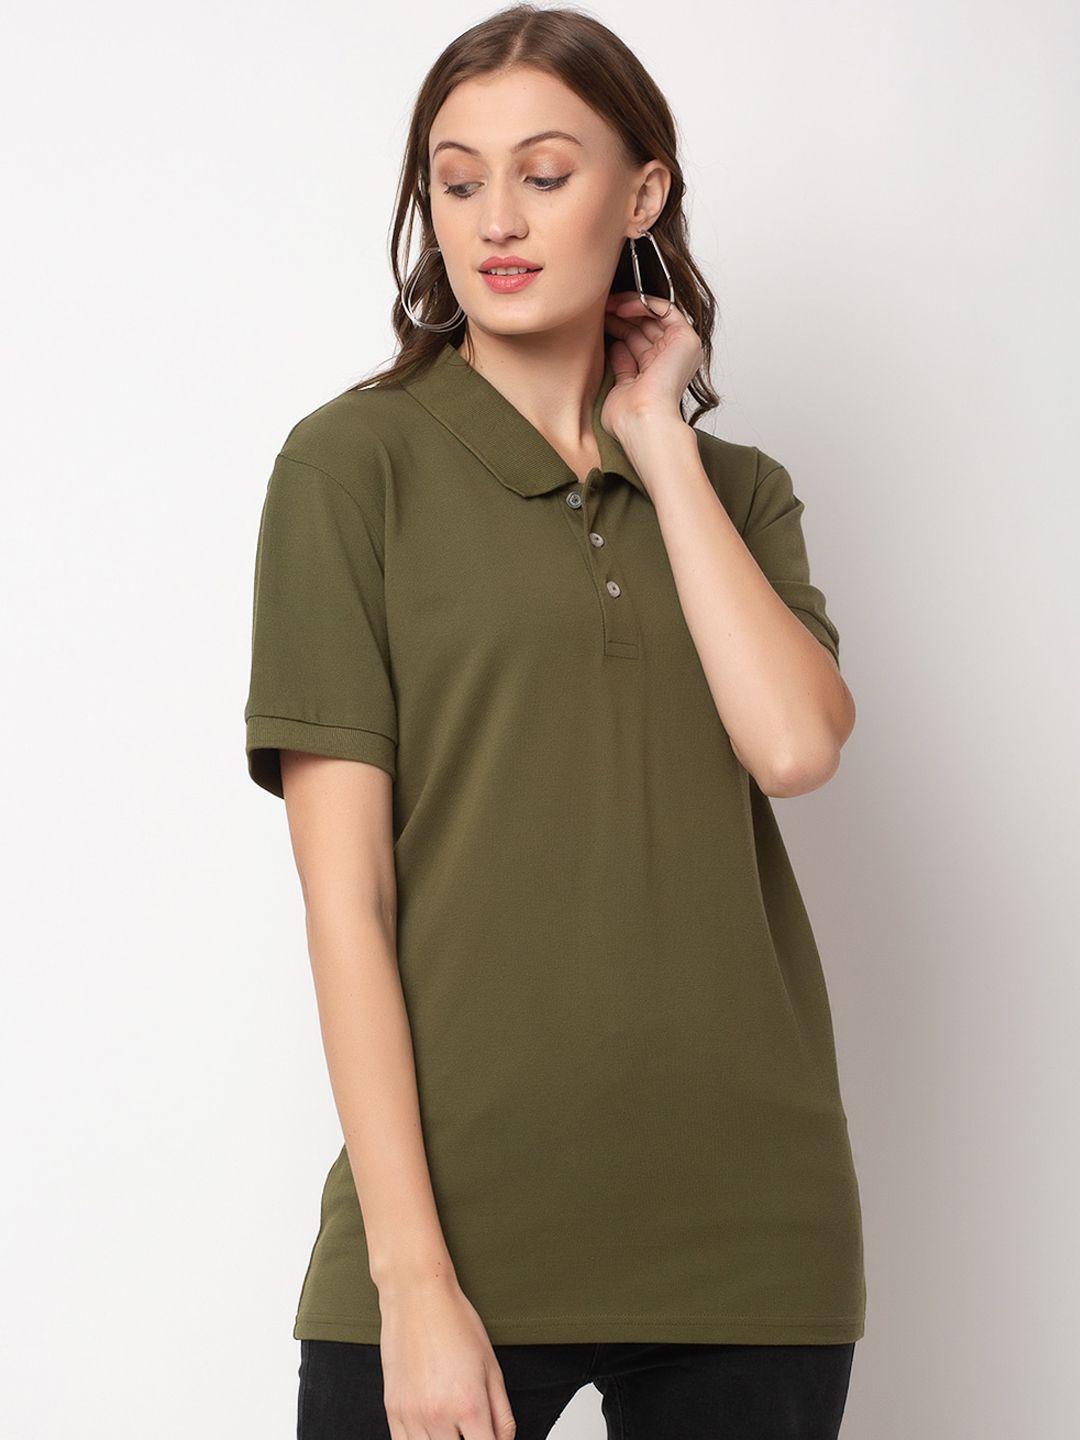 door74 women olive green solid polo collar t-shirt